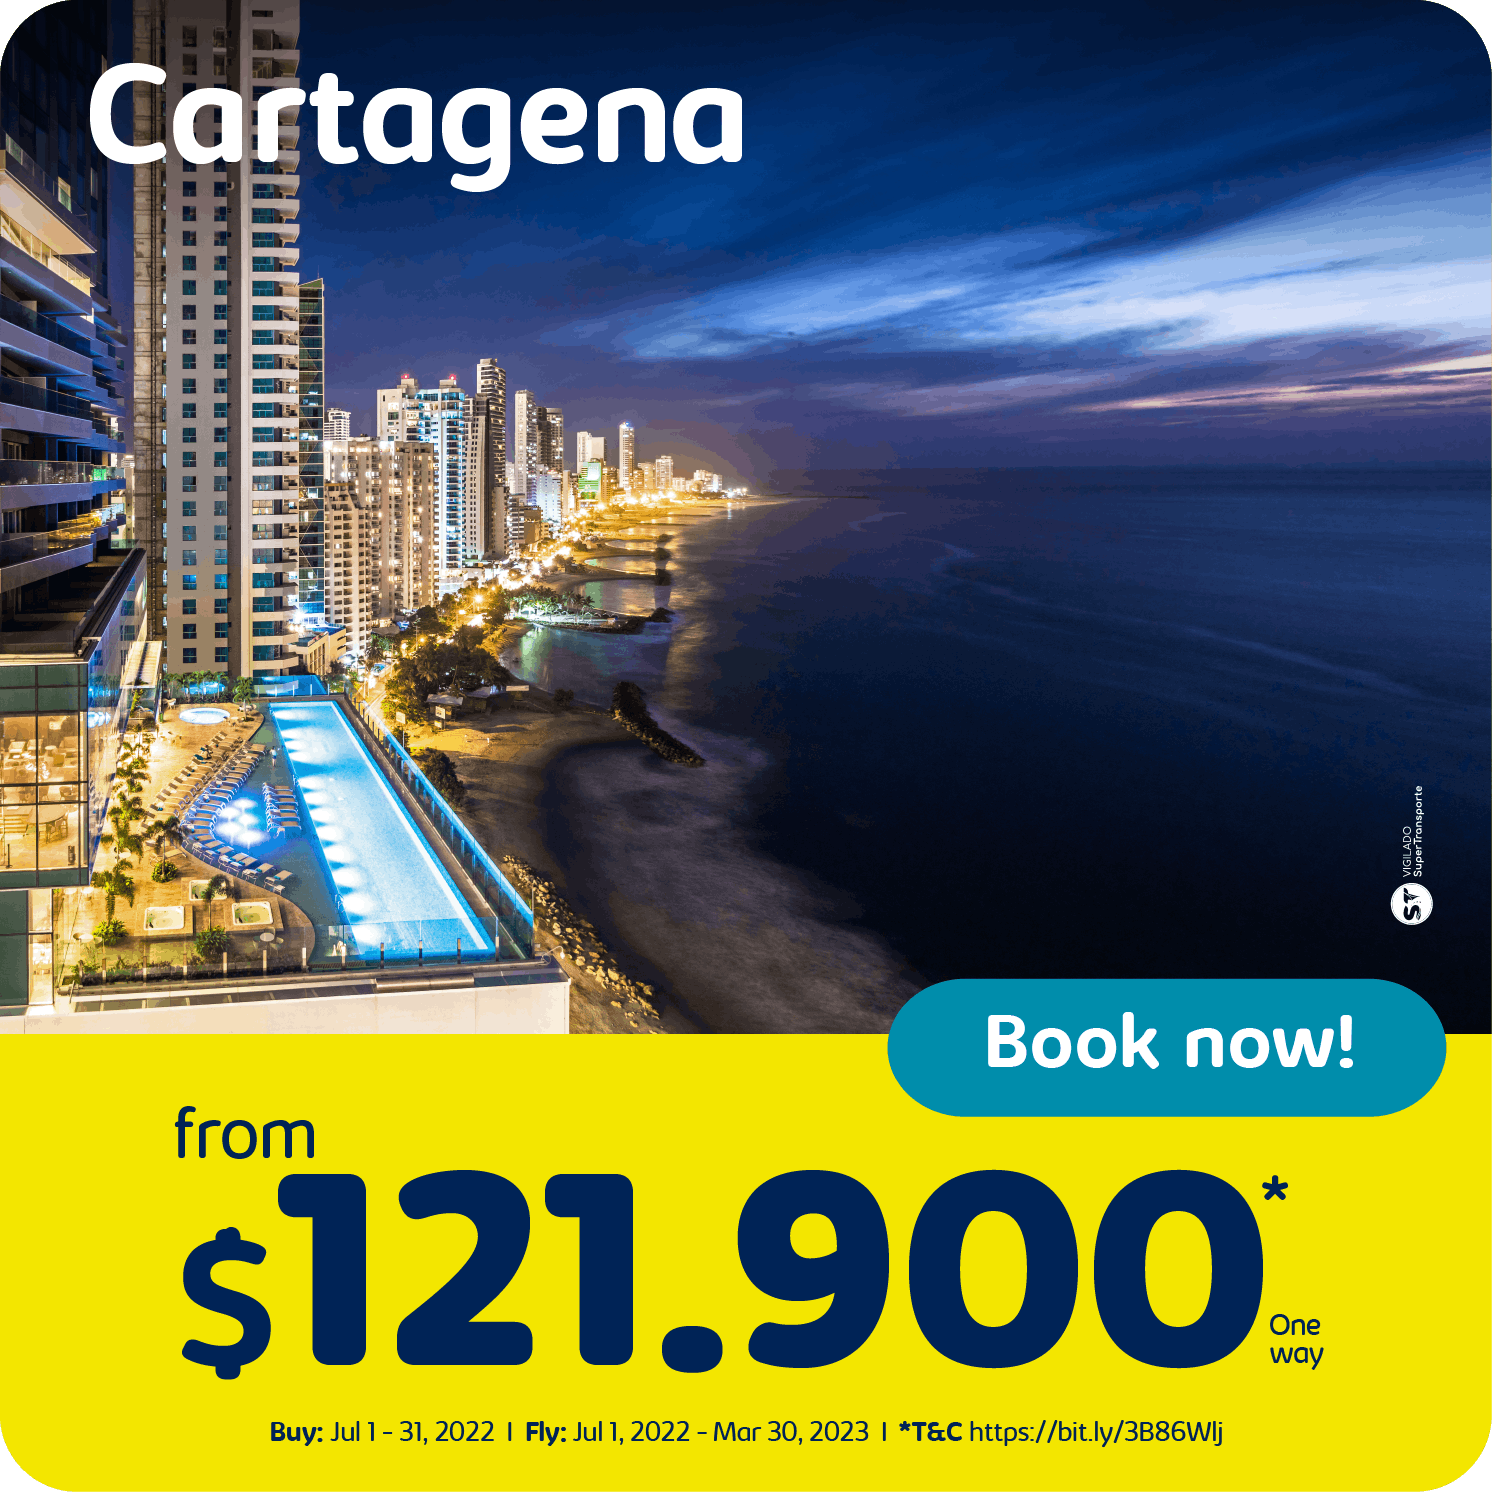 Cheap flights to Cartagena